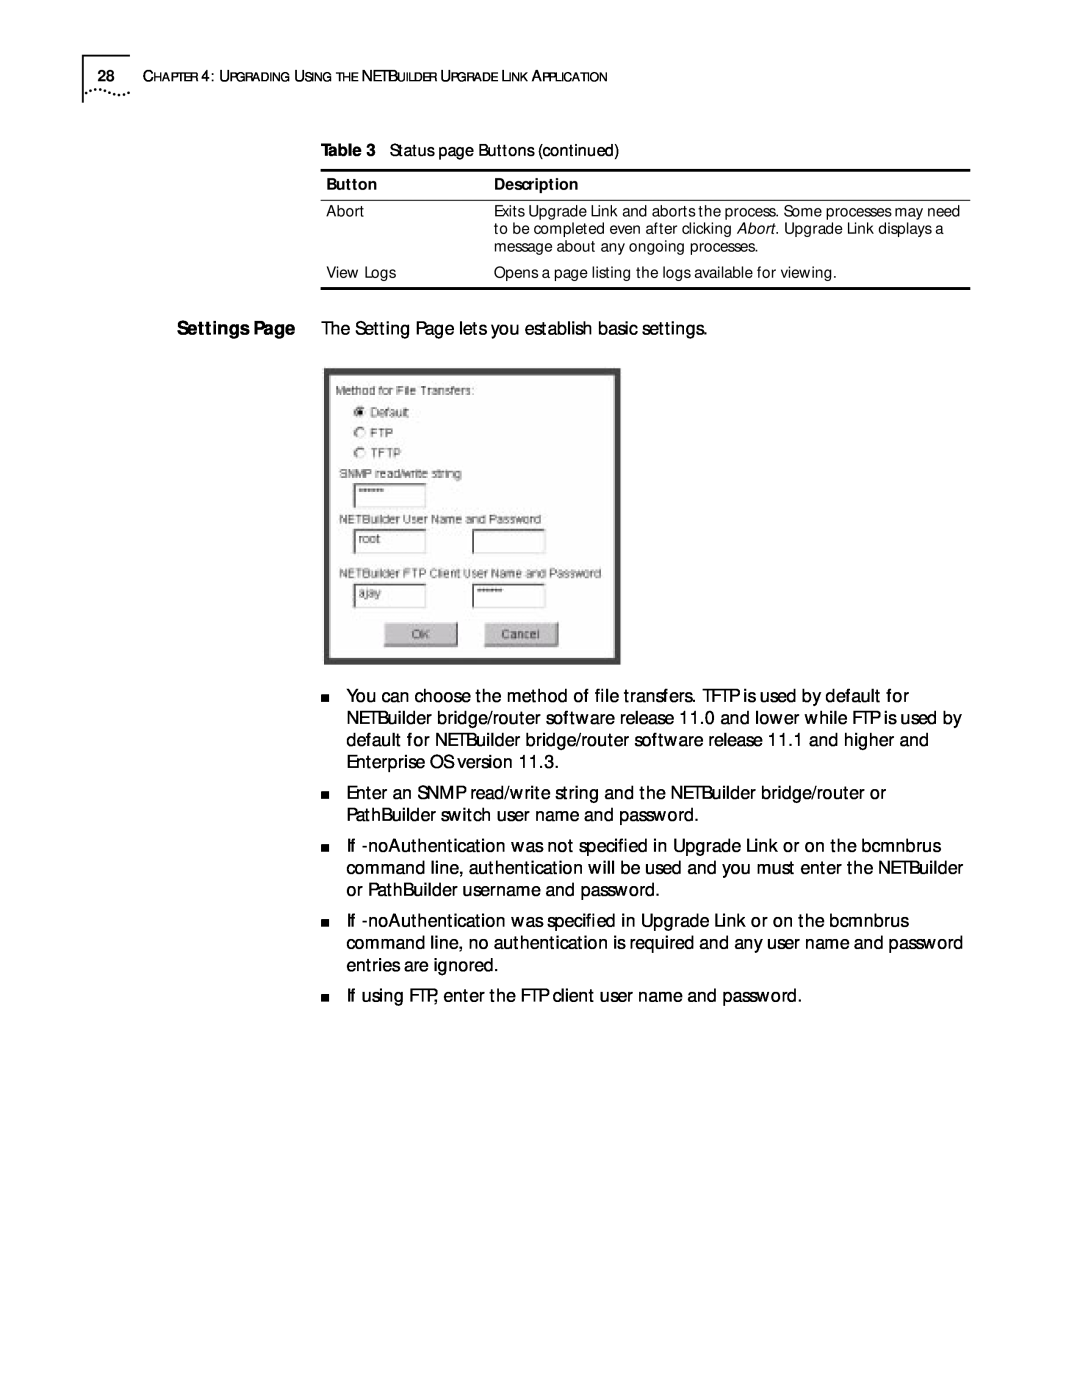 3Com ENTERPRISE OS 11.3 manual Settings Page The Setting Page lets you establish basic settings 